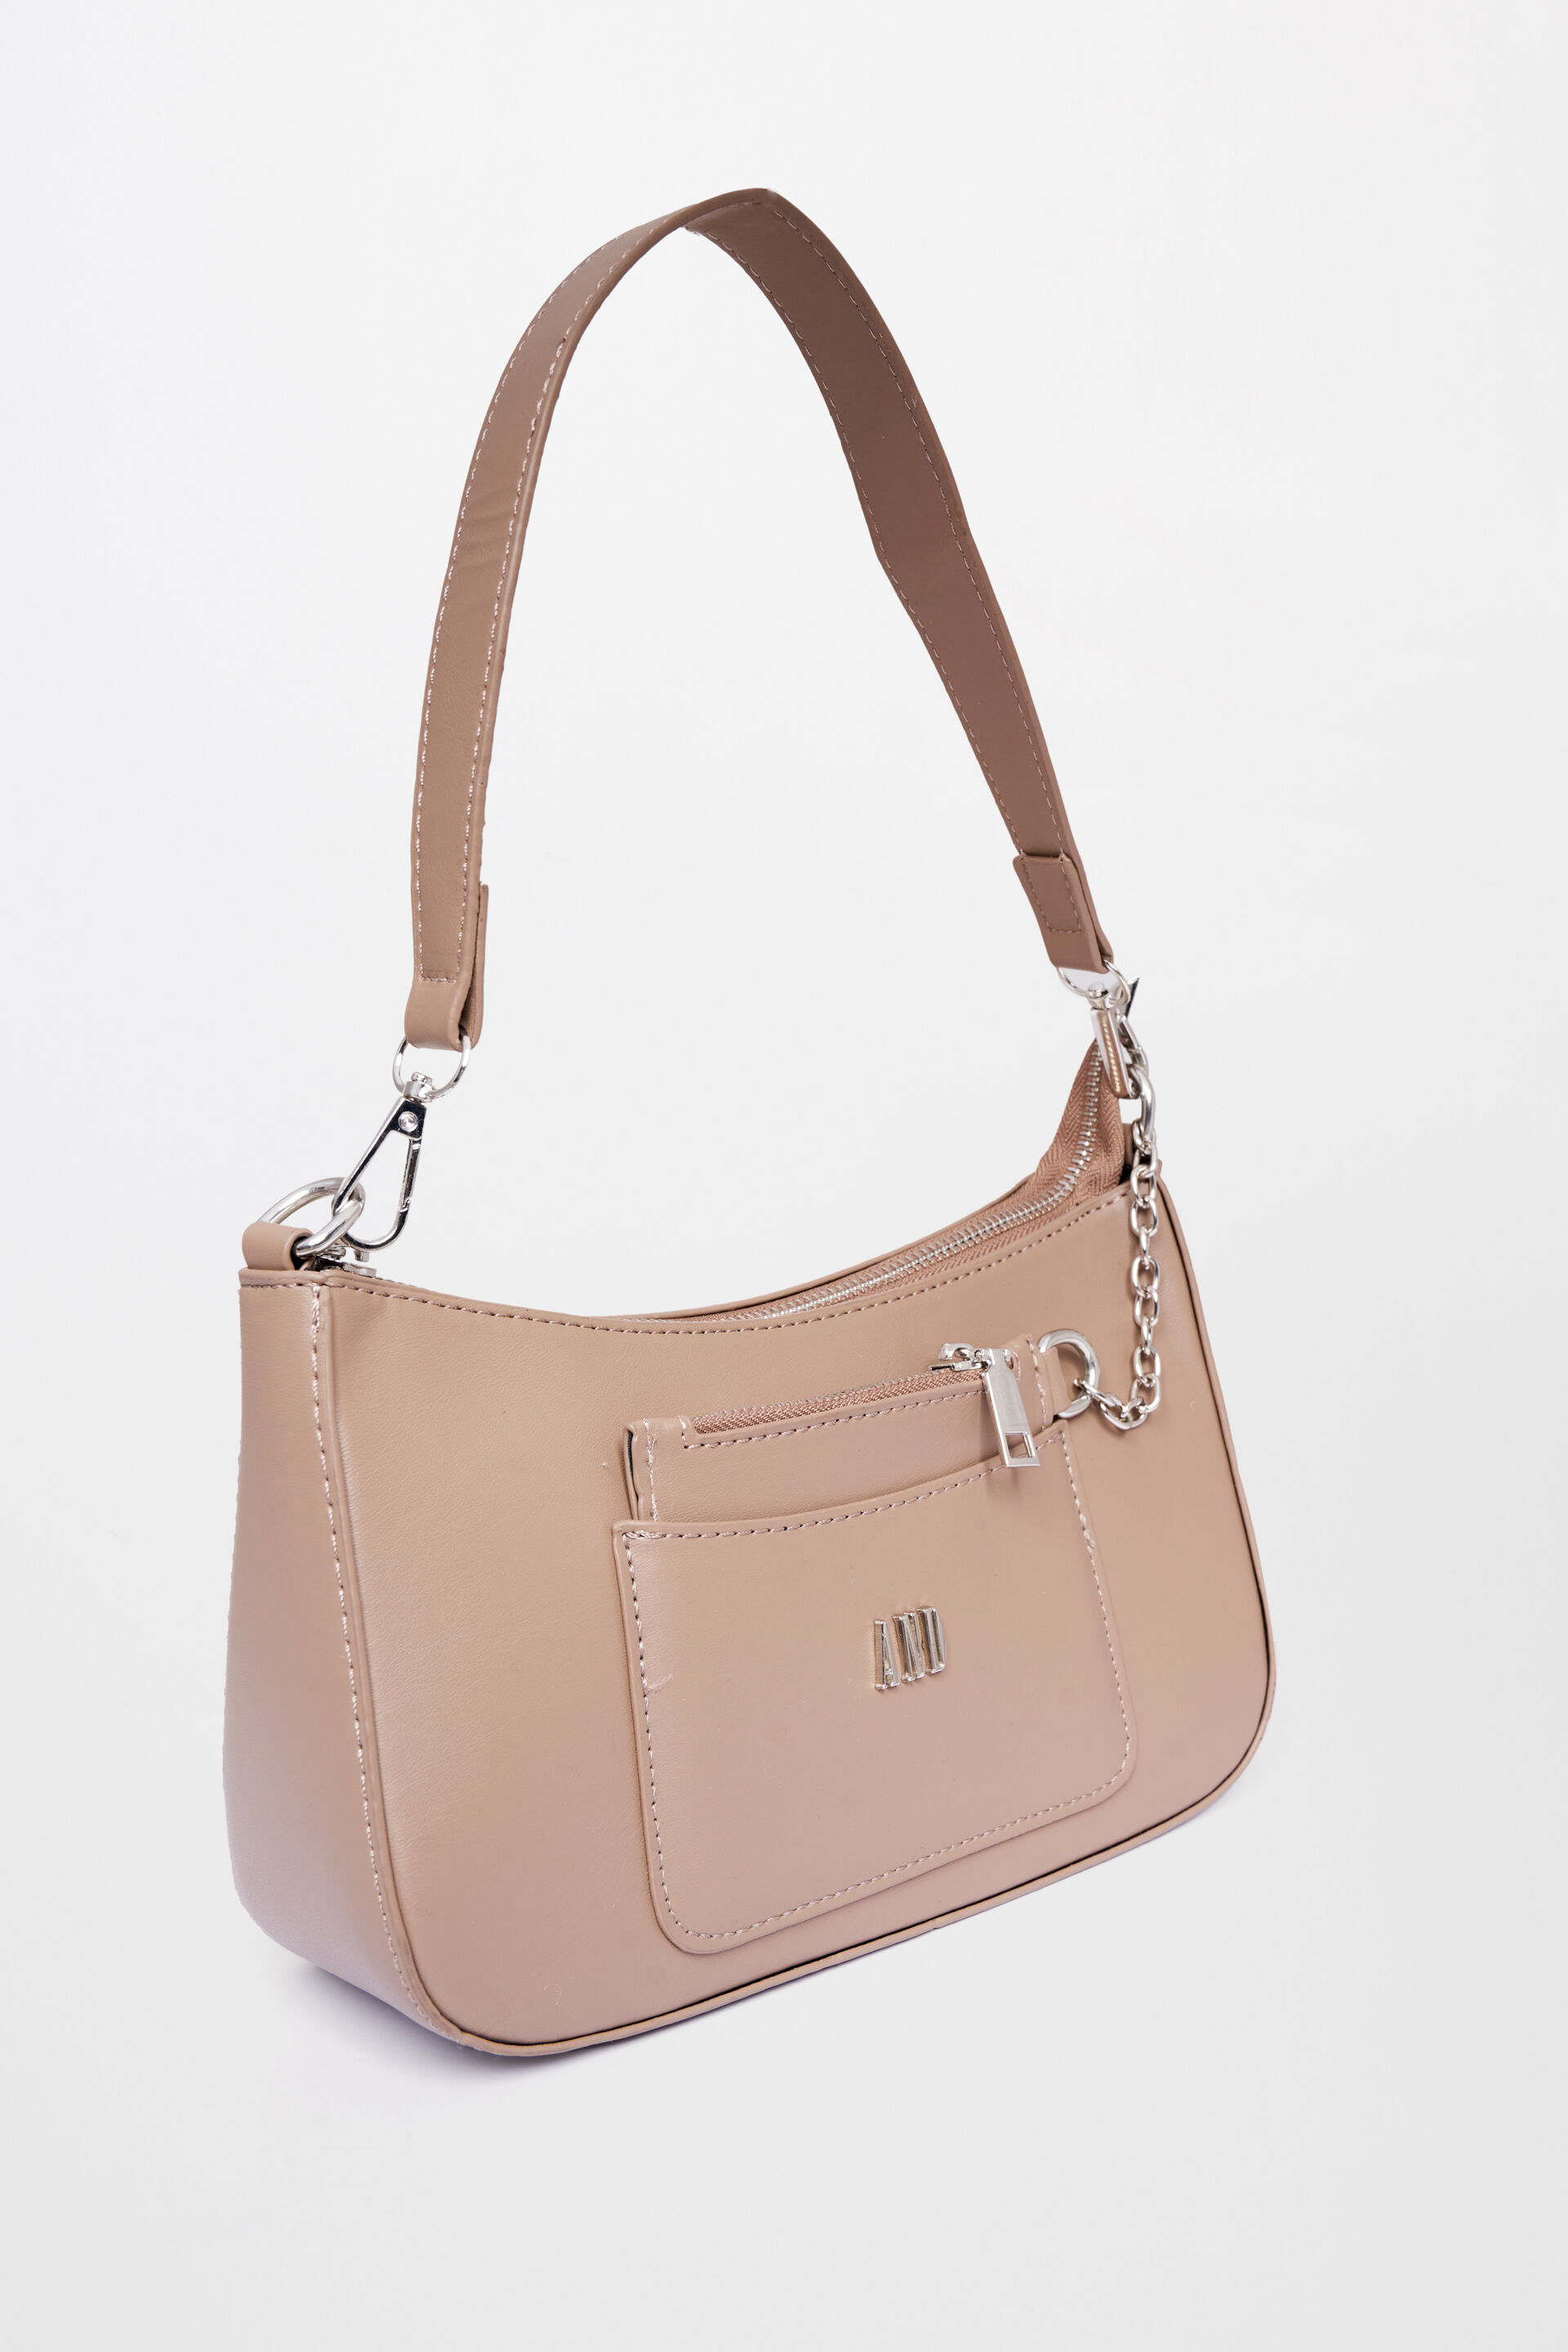 Stock Photo Of a Black and White Designer Handbag or Purse - Vector Clip  Art Illustration Picture | Black and white purses, Purses, Bags